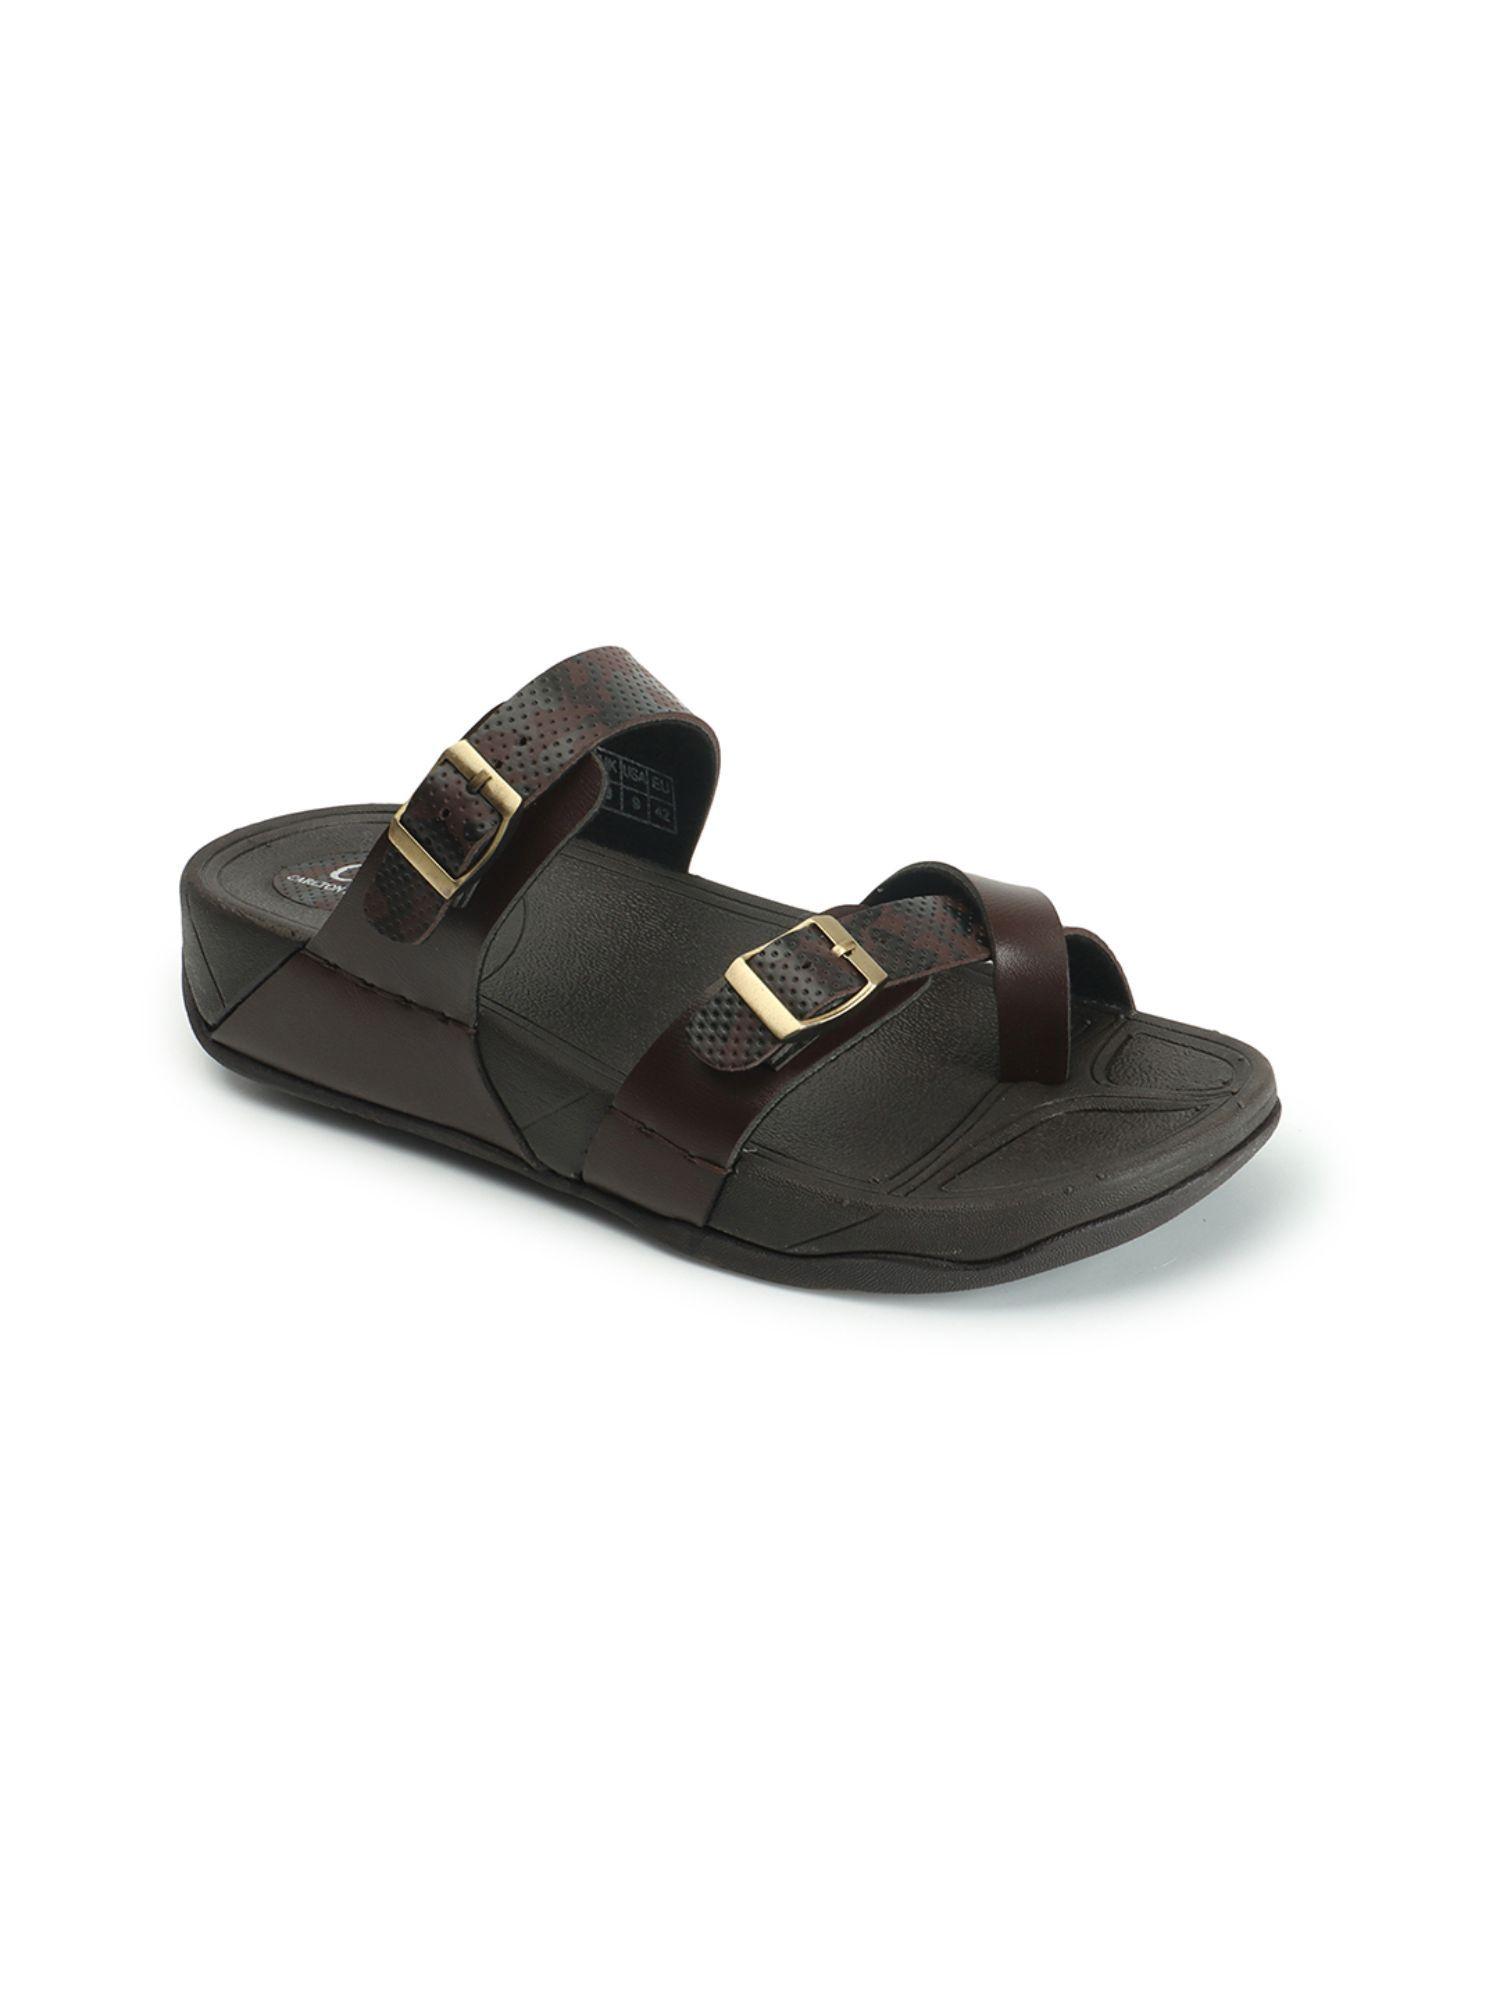 mens brown color solid buckle sandals